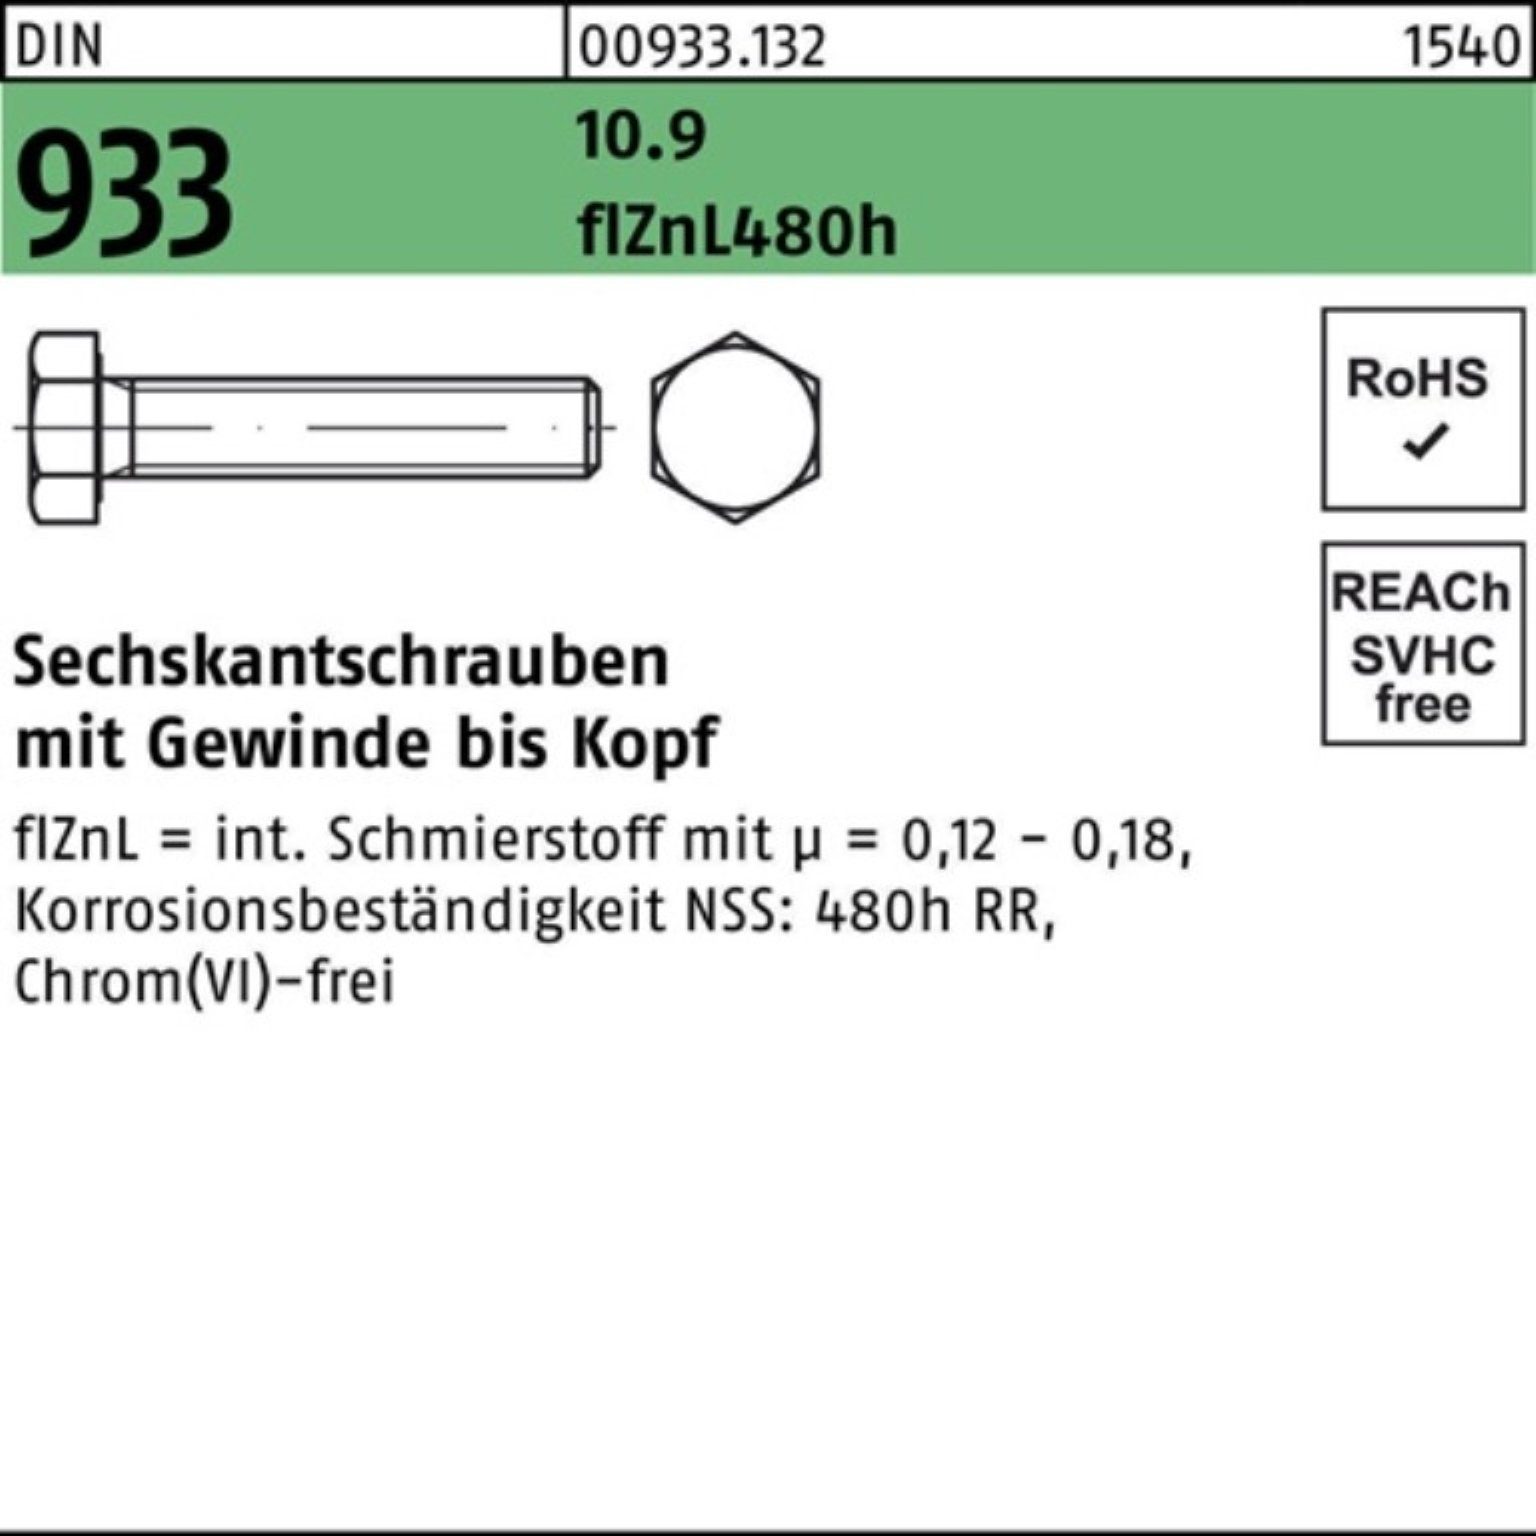 Reyher Sechskantschraube 100er Pack Sechskantschraube DIN 933 VG M16x 25 10.9 flZnL/nc/x/x/480h